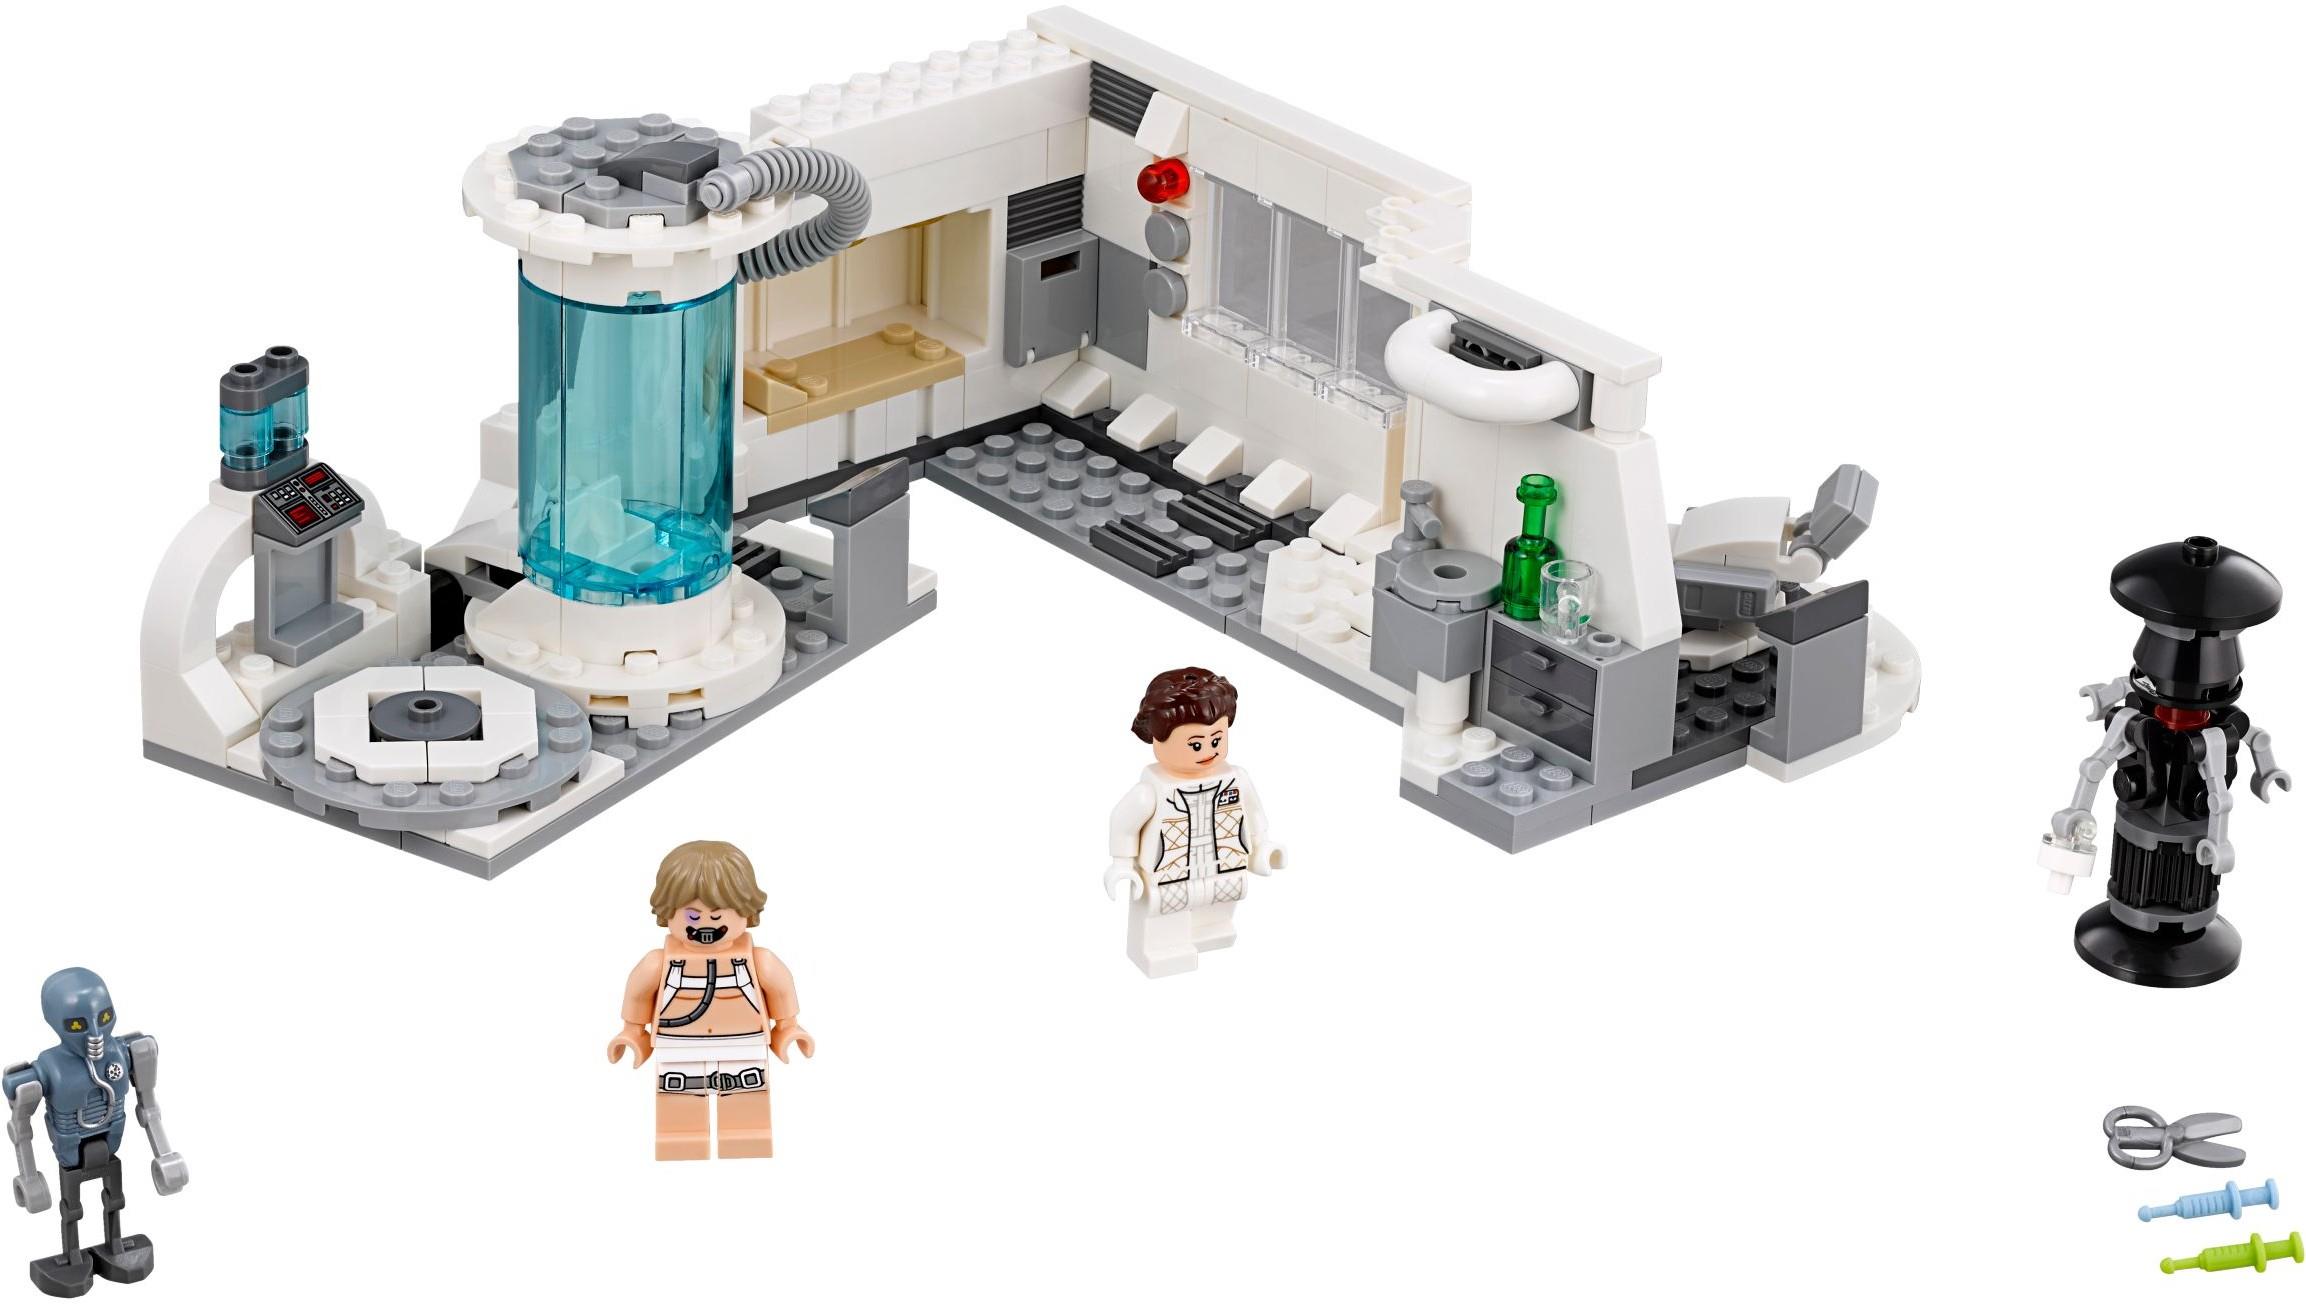 NEU/OVP Lego Star Wars Hoth Medical Chamber new/sealed 75203 